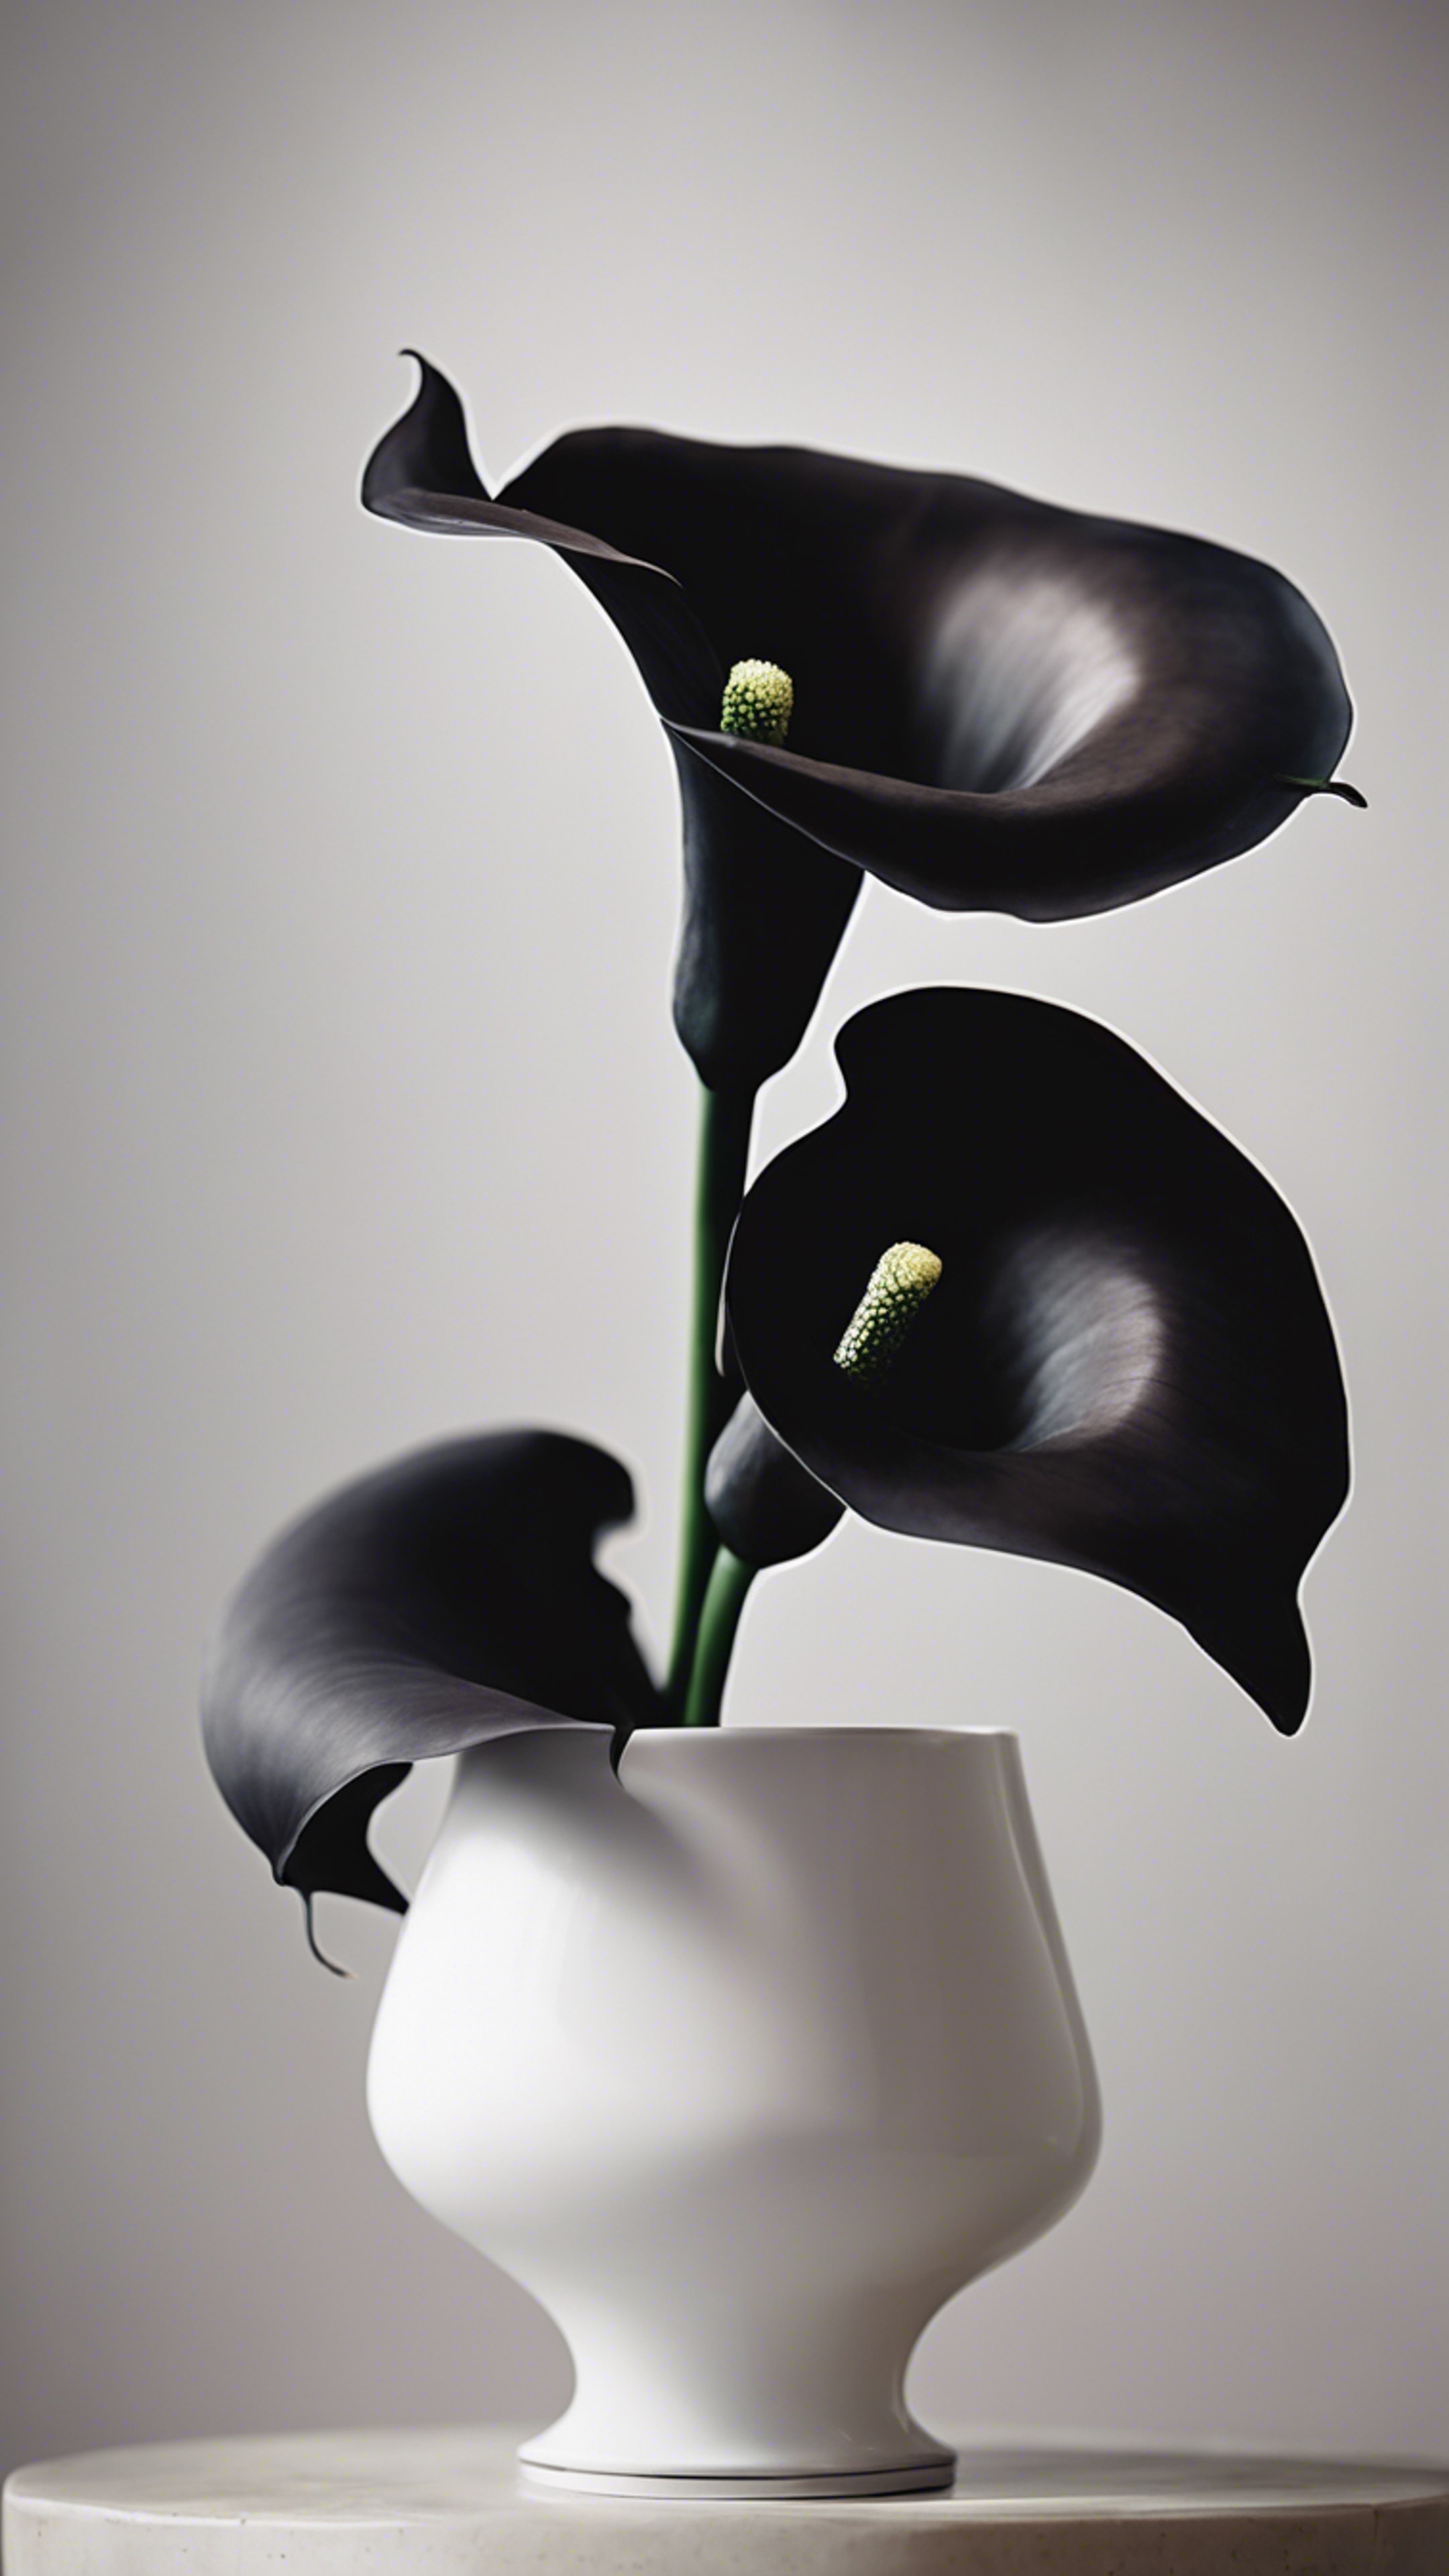 A breathtaking centerpiece featuring a black calla lily in a modern white vase. Divar kağızı[9d5d01b6790e4db4a8d5]